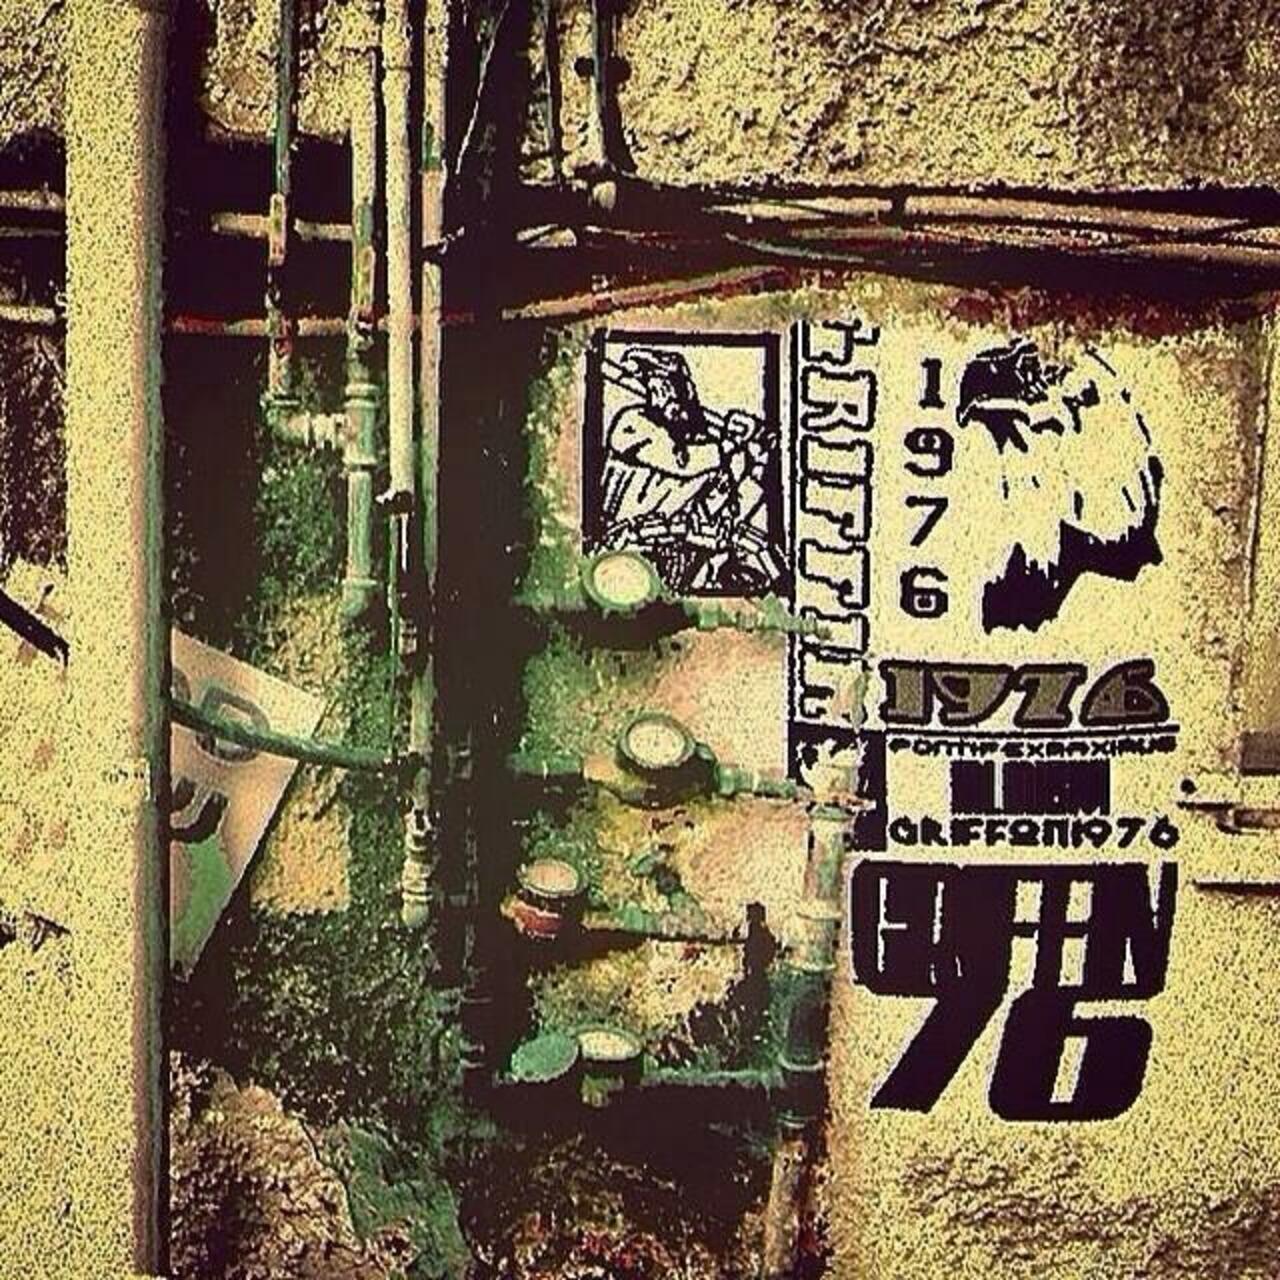 My last visit in the street!!! #streetart #art #Graffiti #stickers #urban #wall @photobalto @StreetArtShow http://t.co/gOUVqOVLi5